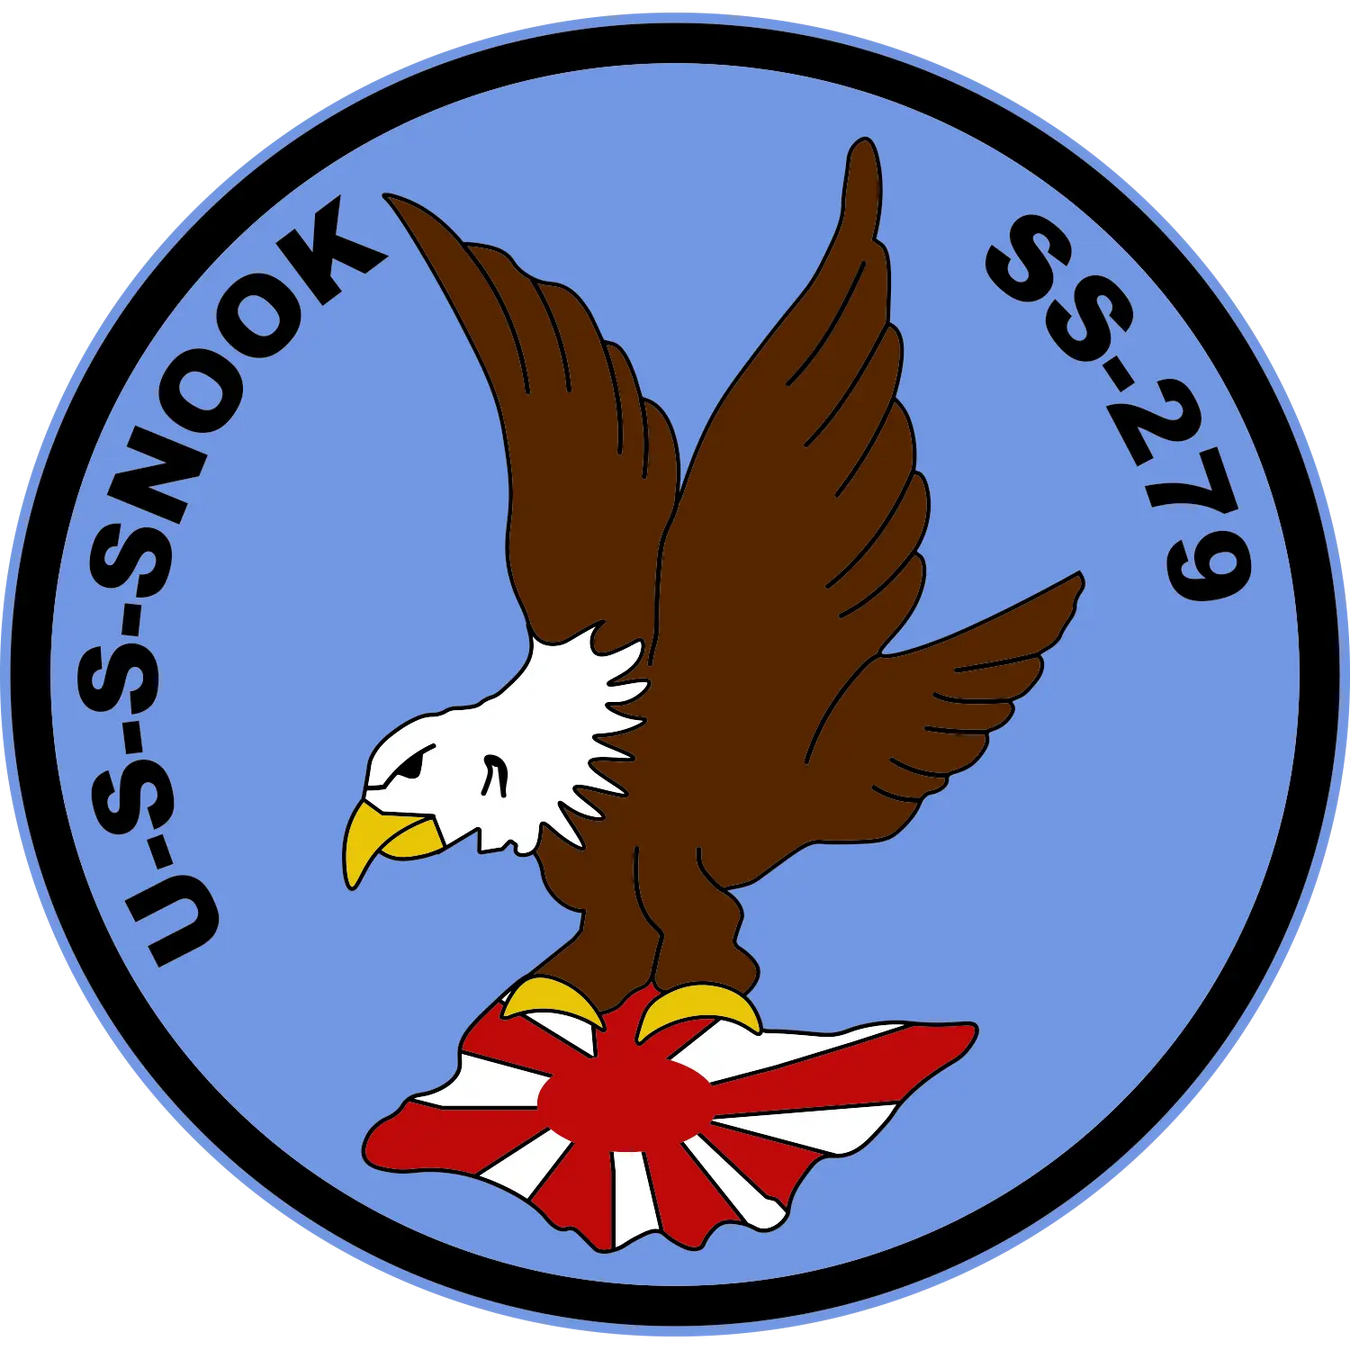 USS Snook (SS-279)